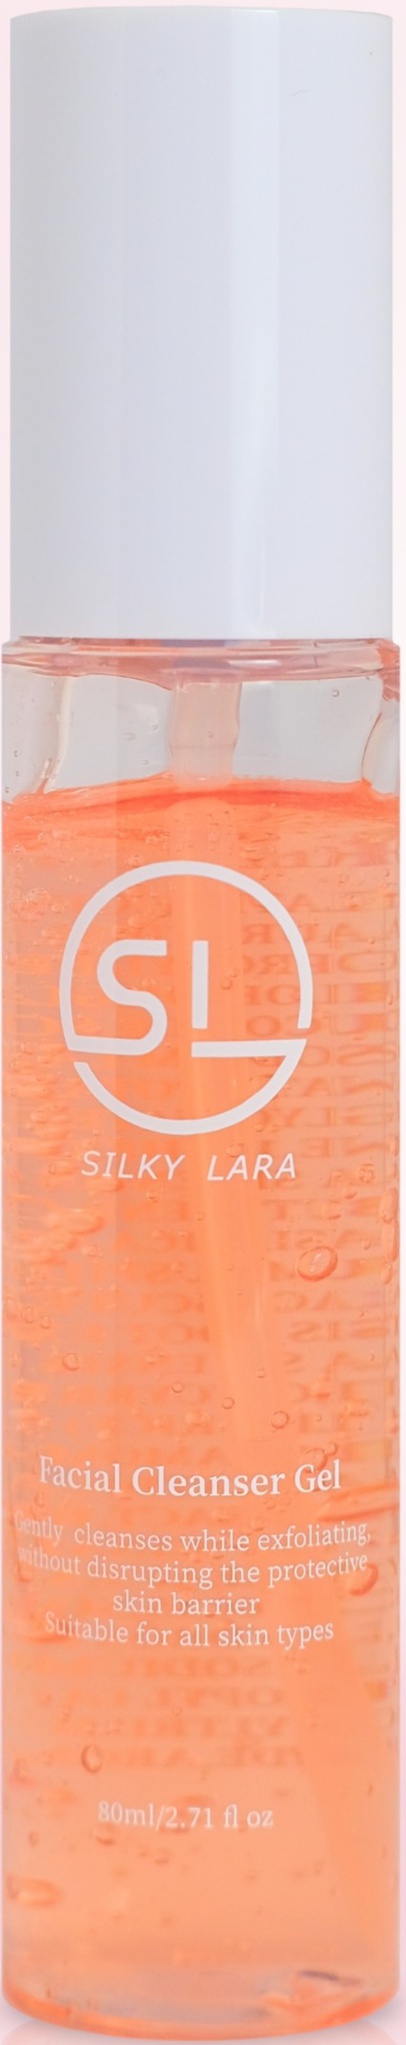 Silky Lara Facial Cleanser Gel